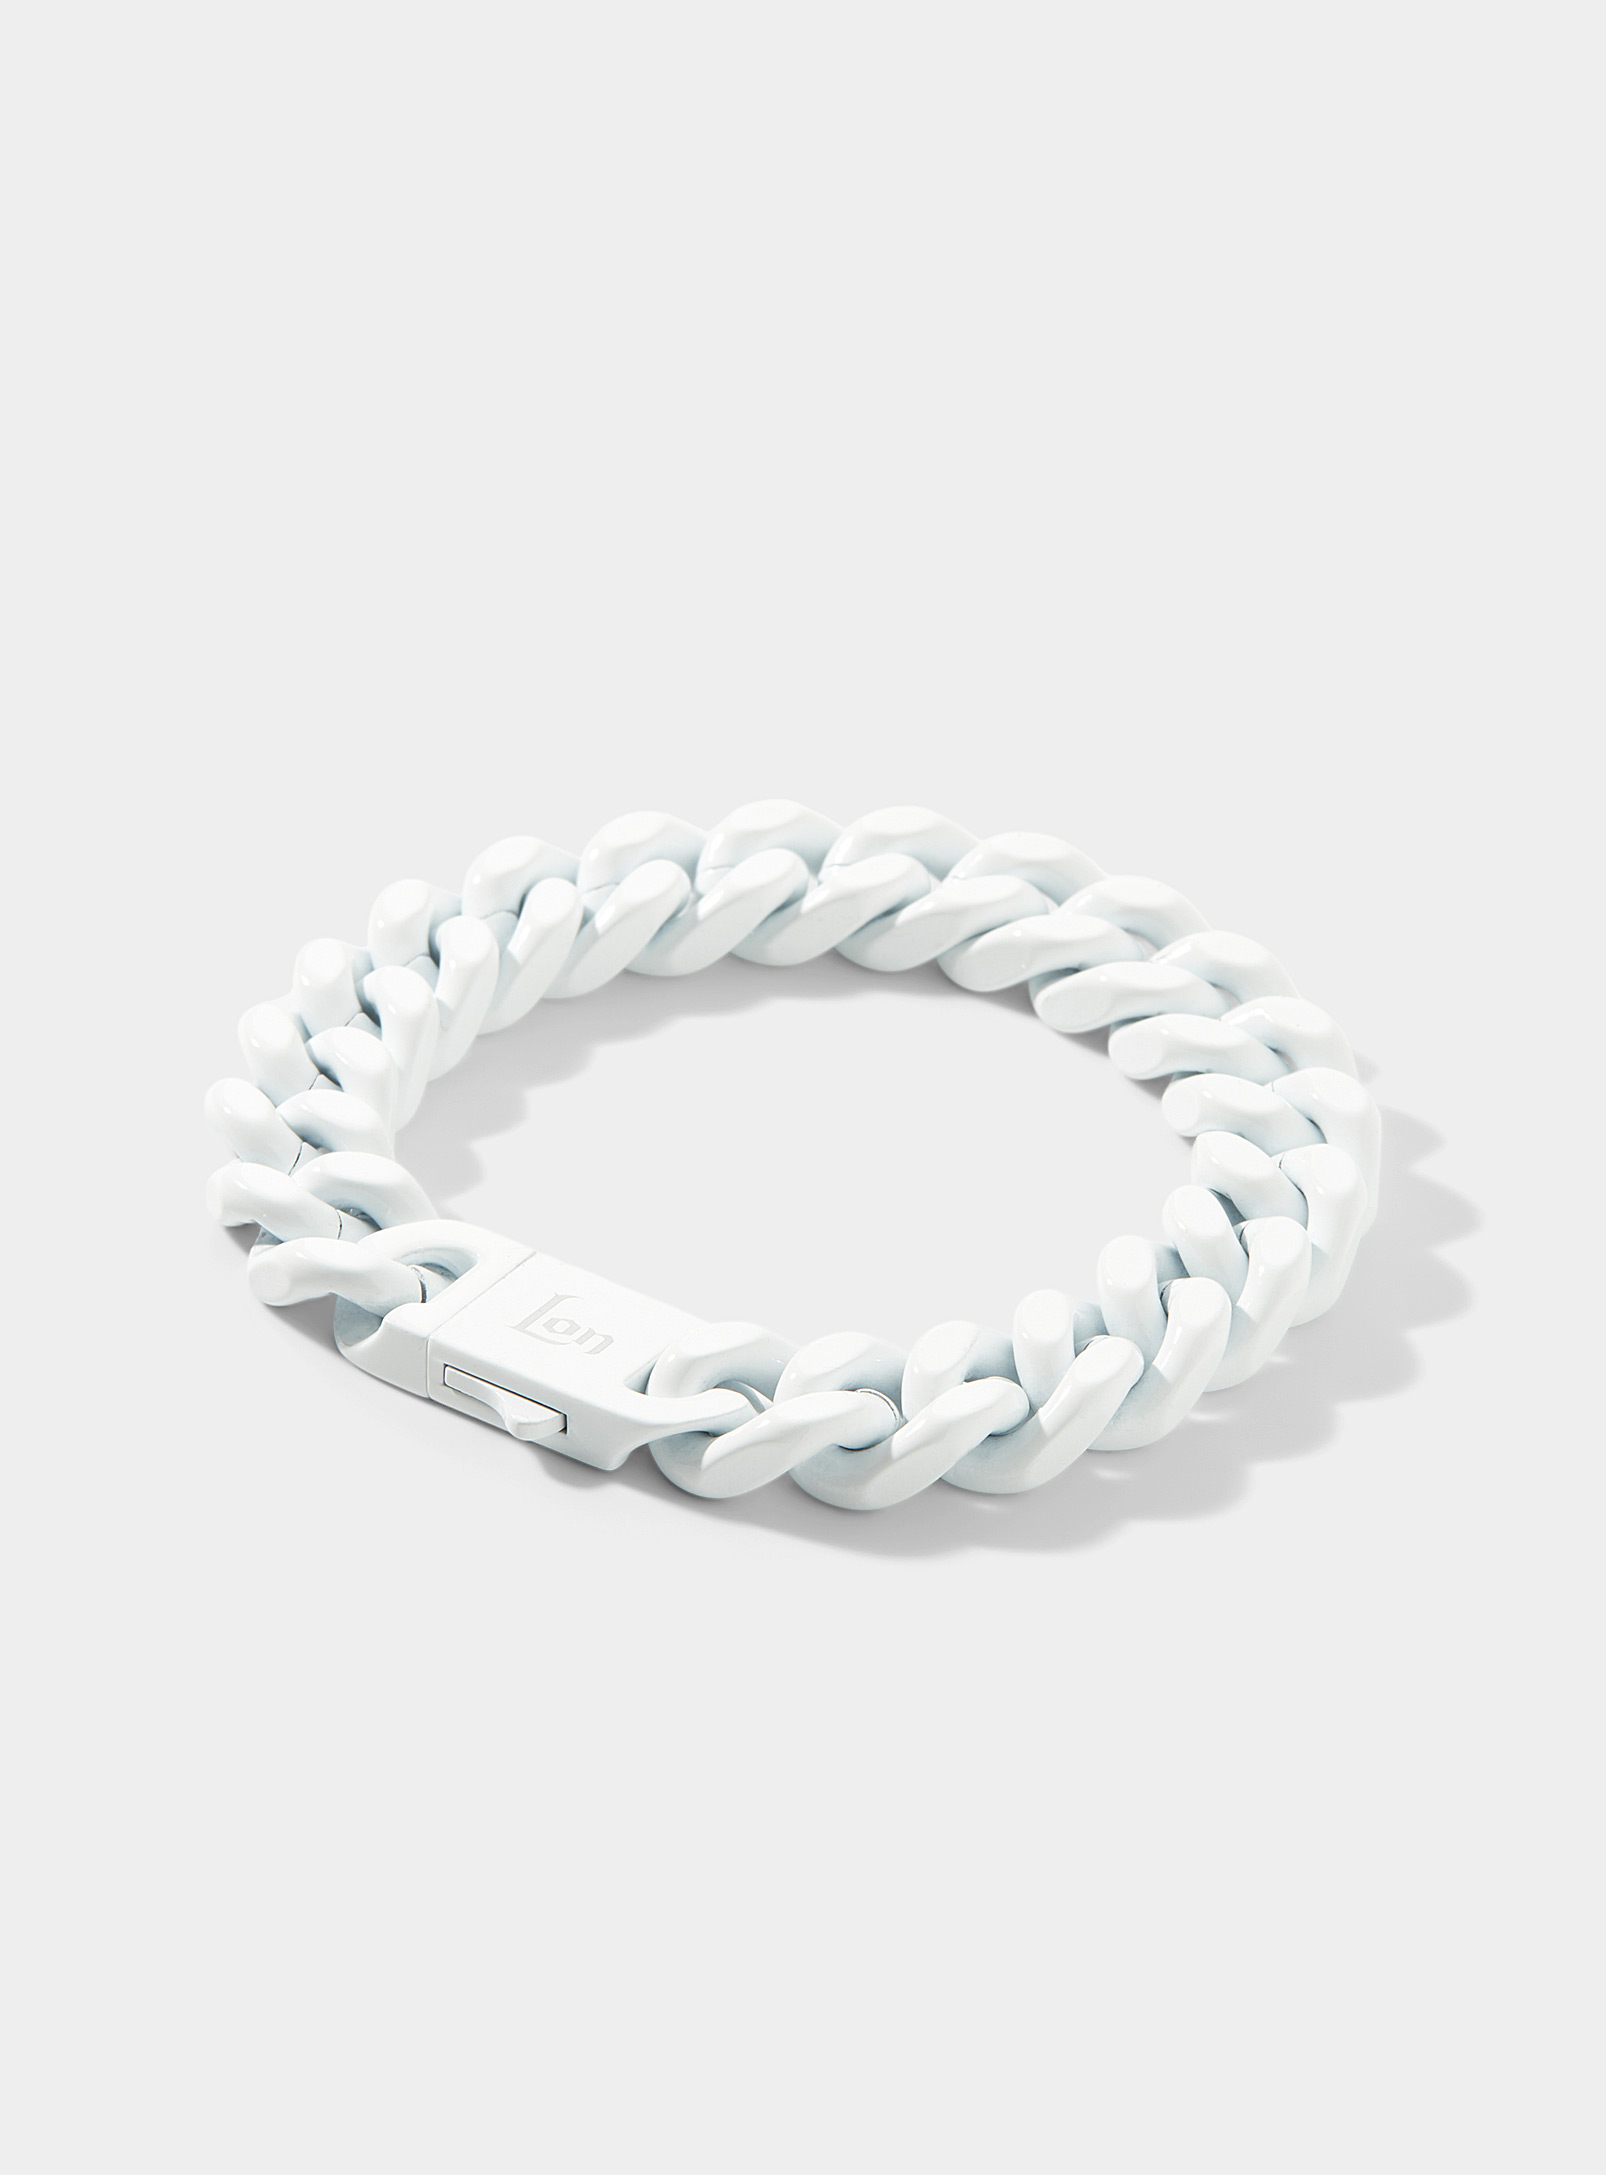 Louis Vuitton Chain Links Necklace Square Powder White in Ceramic